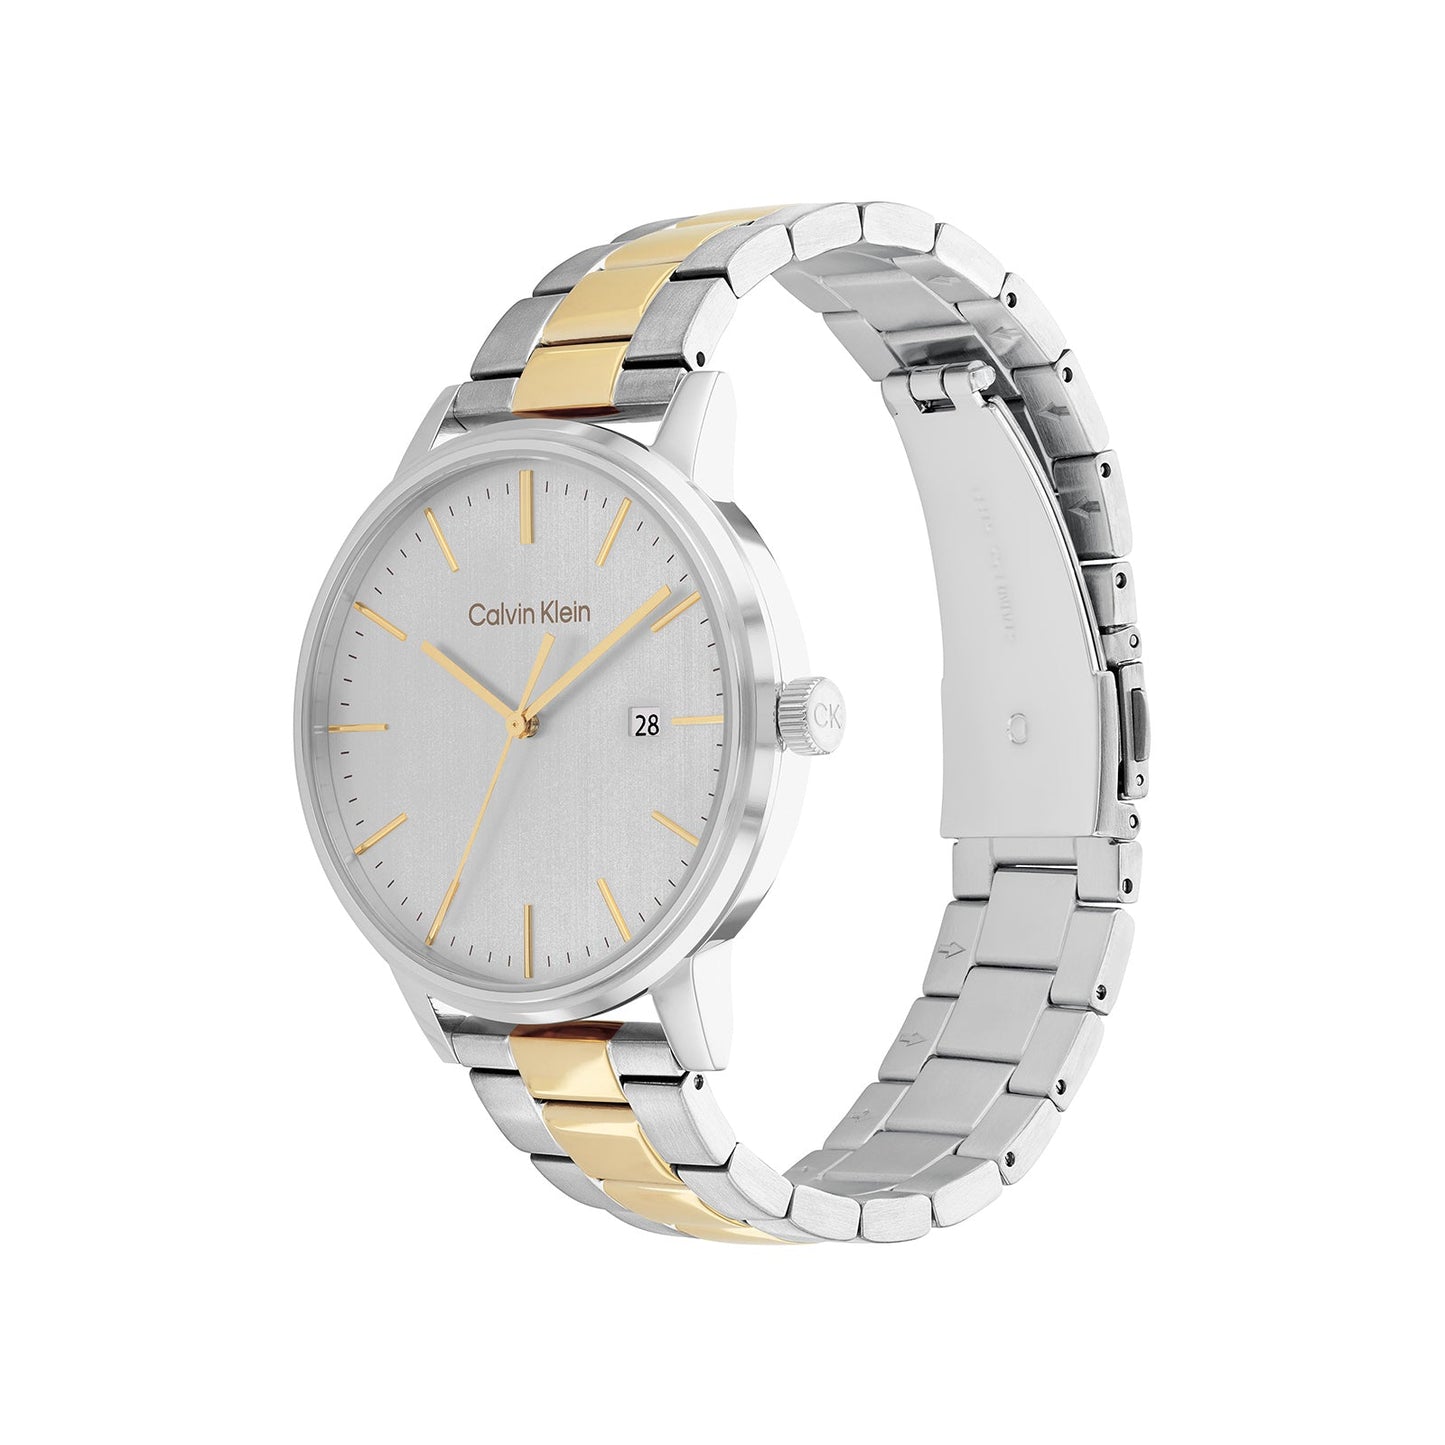 Calvin Klein 25200055 Men's Two-tone Watch